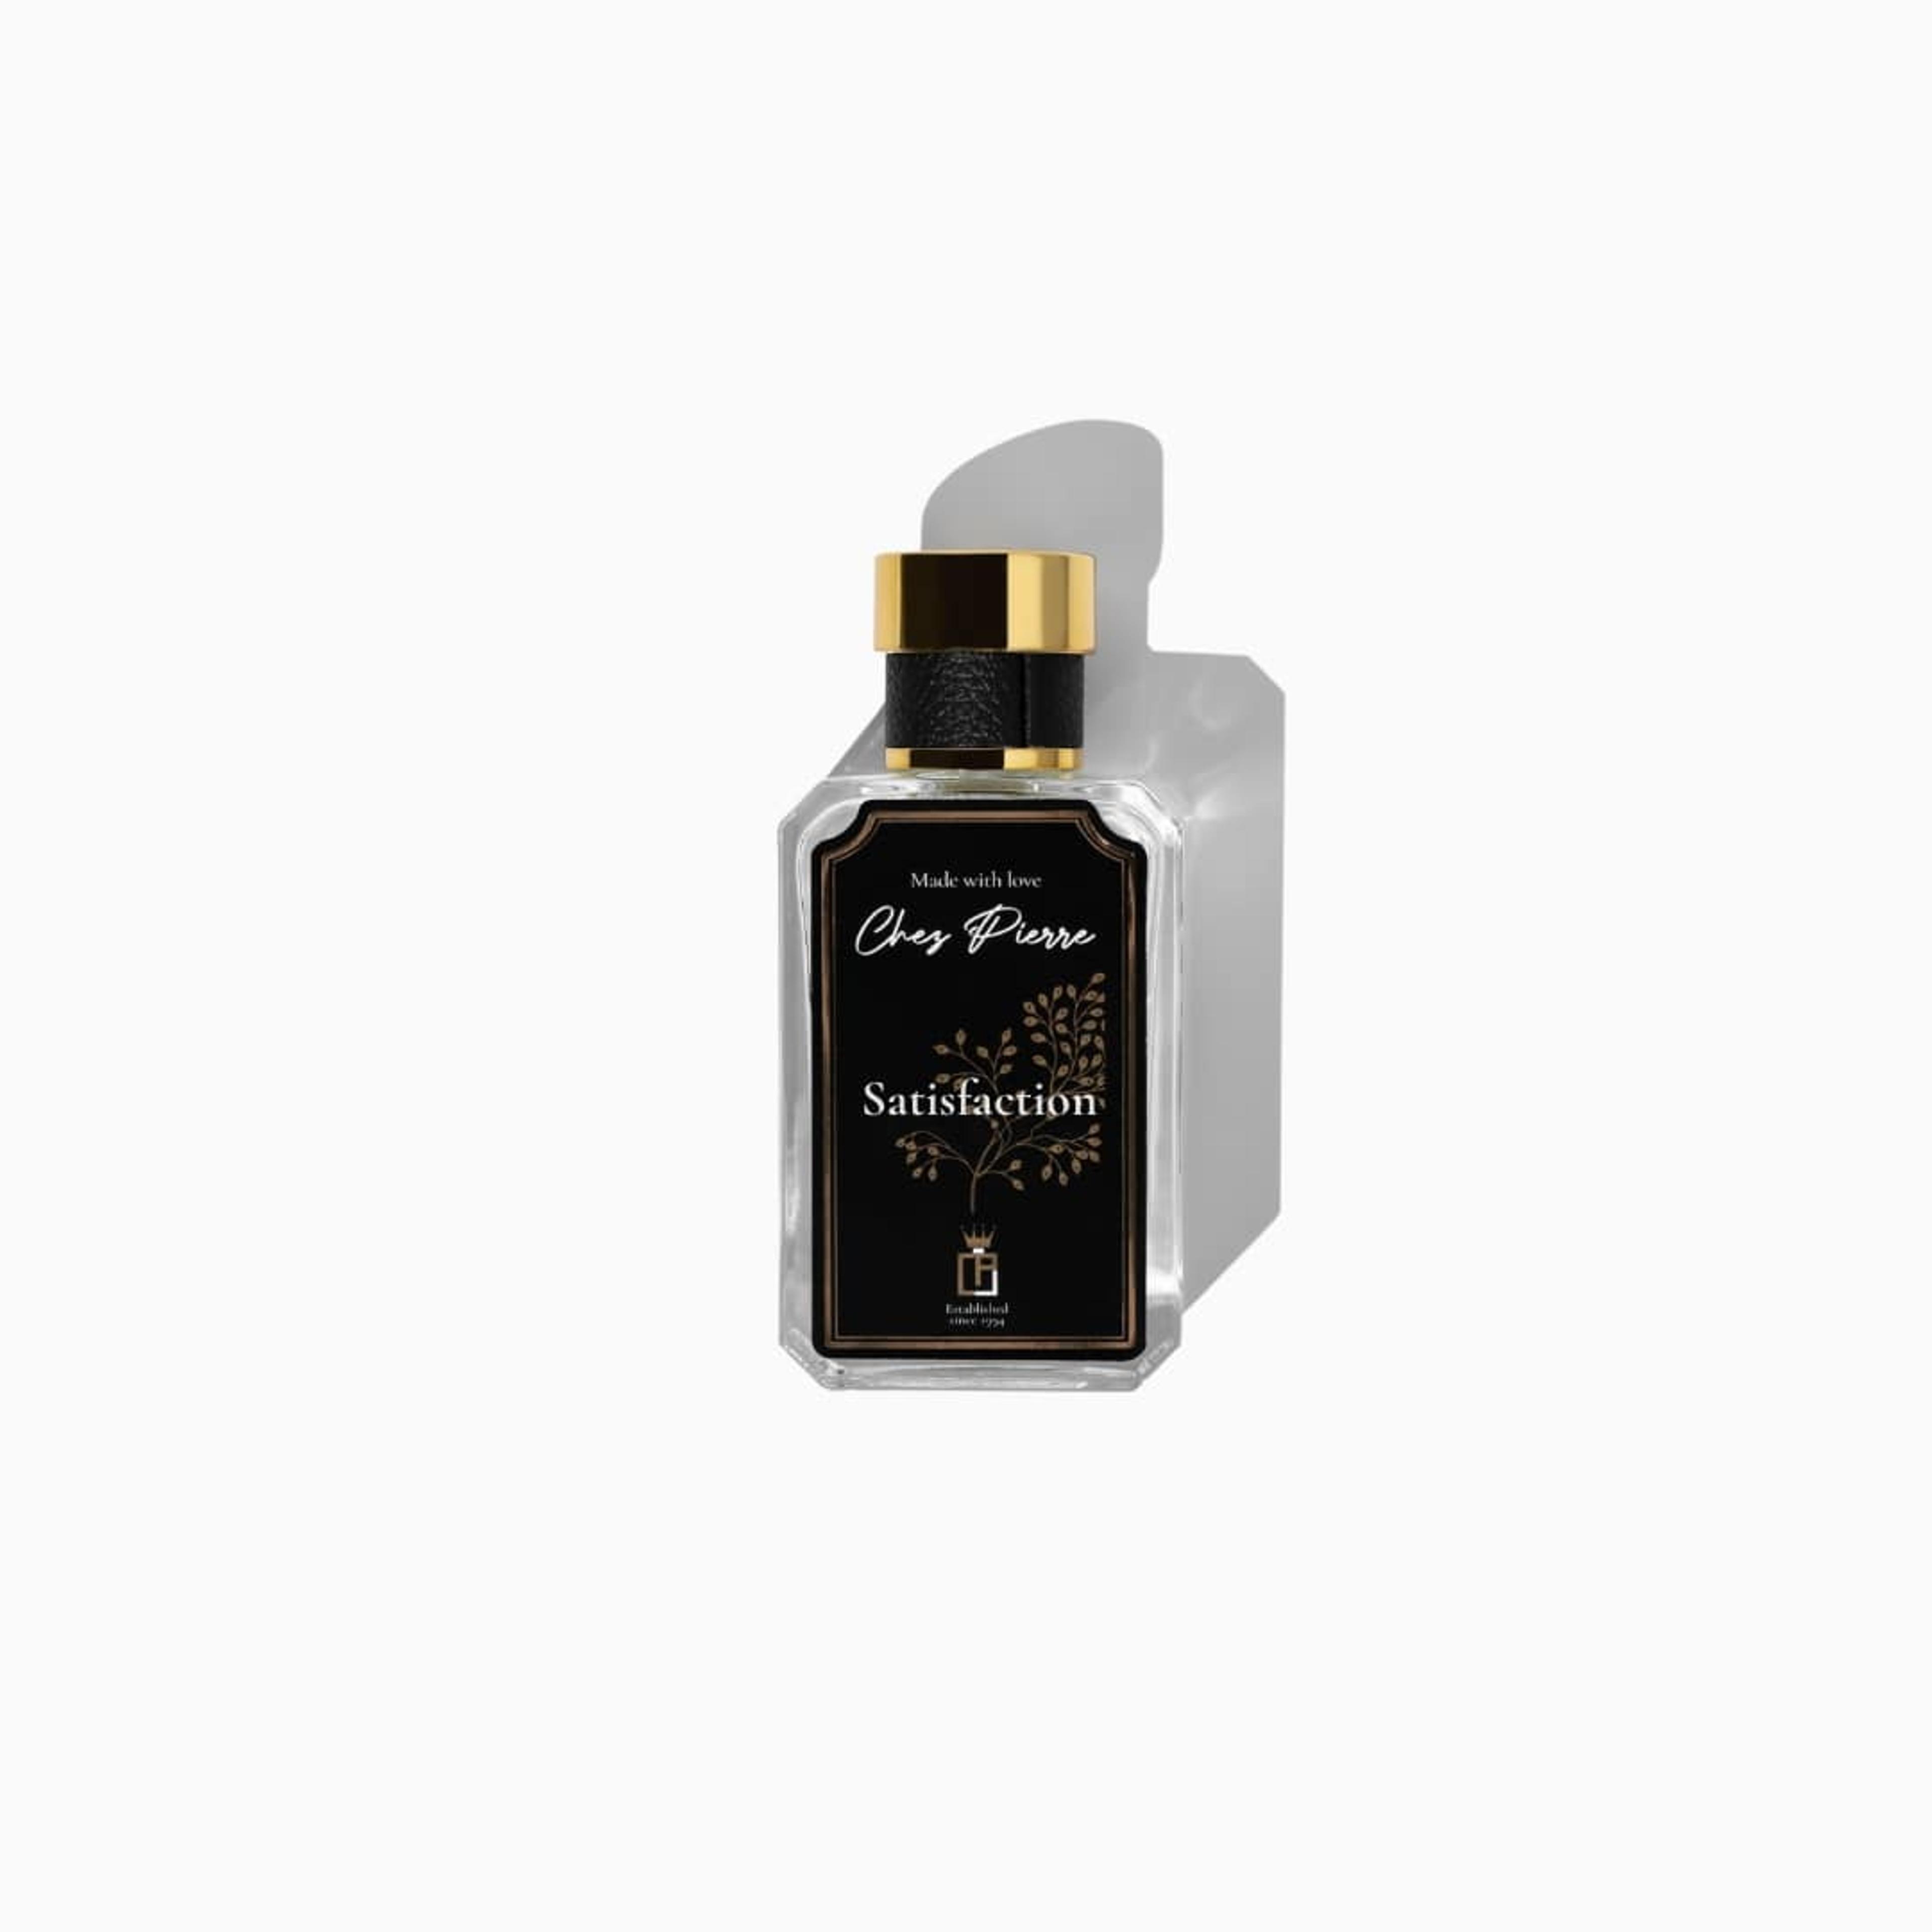 Chez Pierre's Satisfaction Perfume Inspired By Neroli Portofino